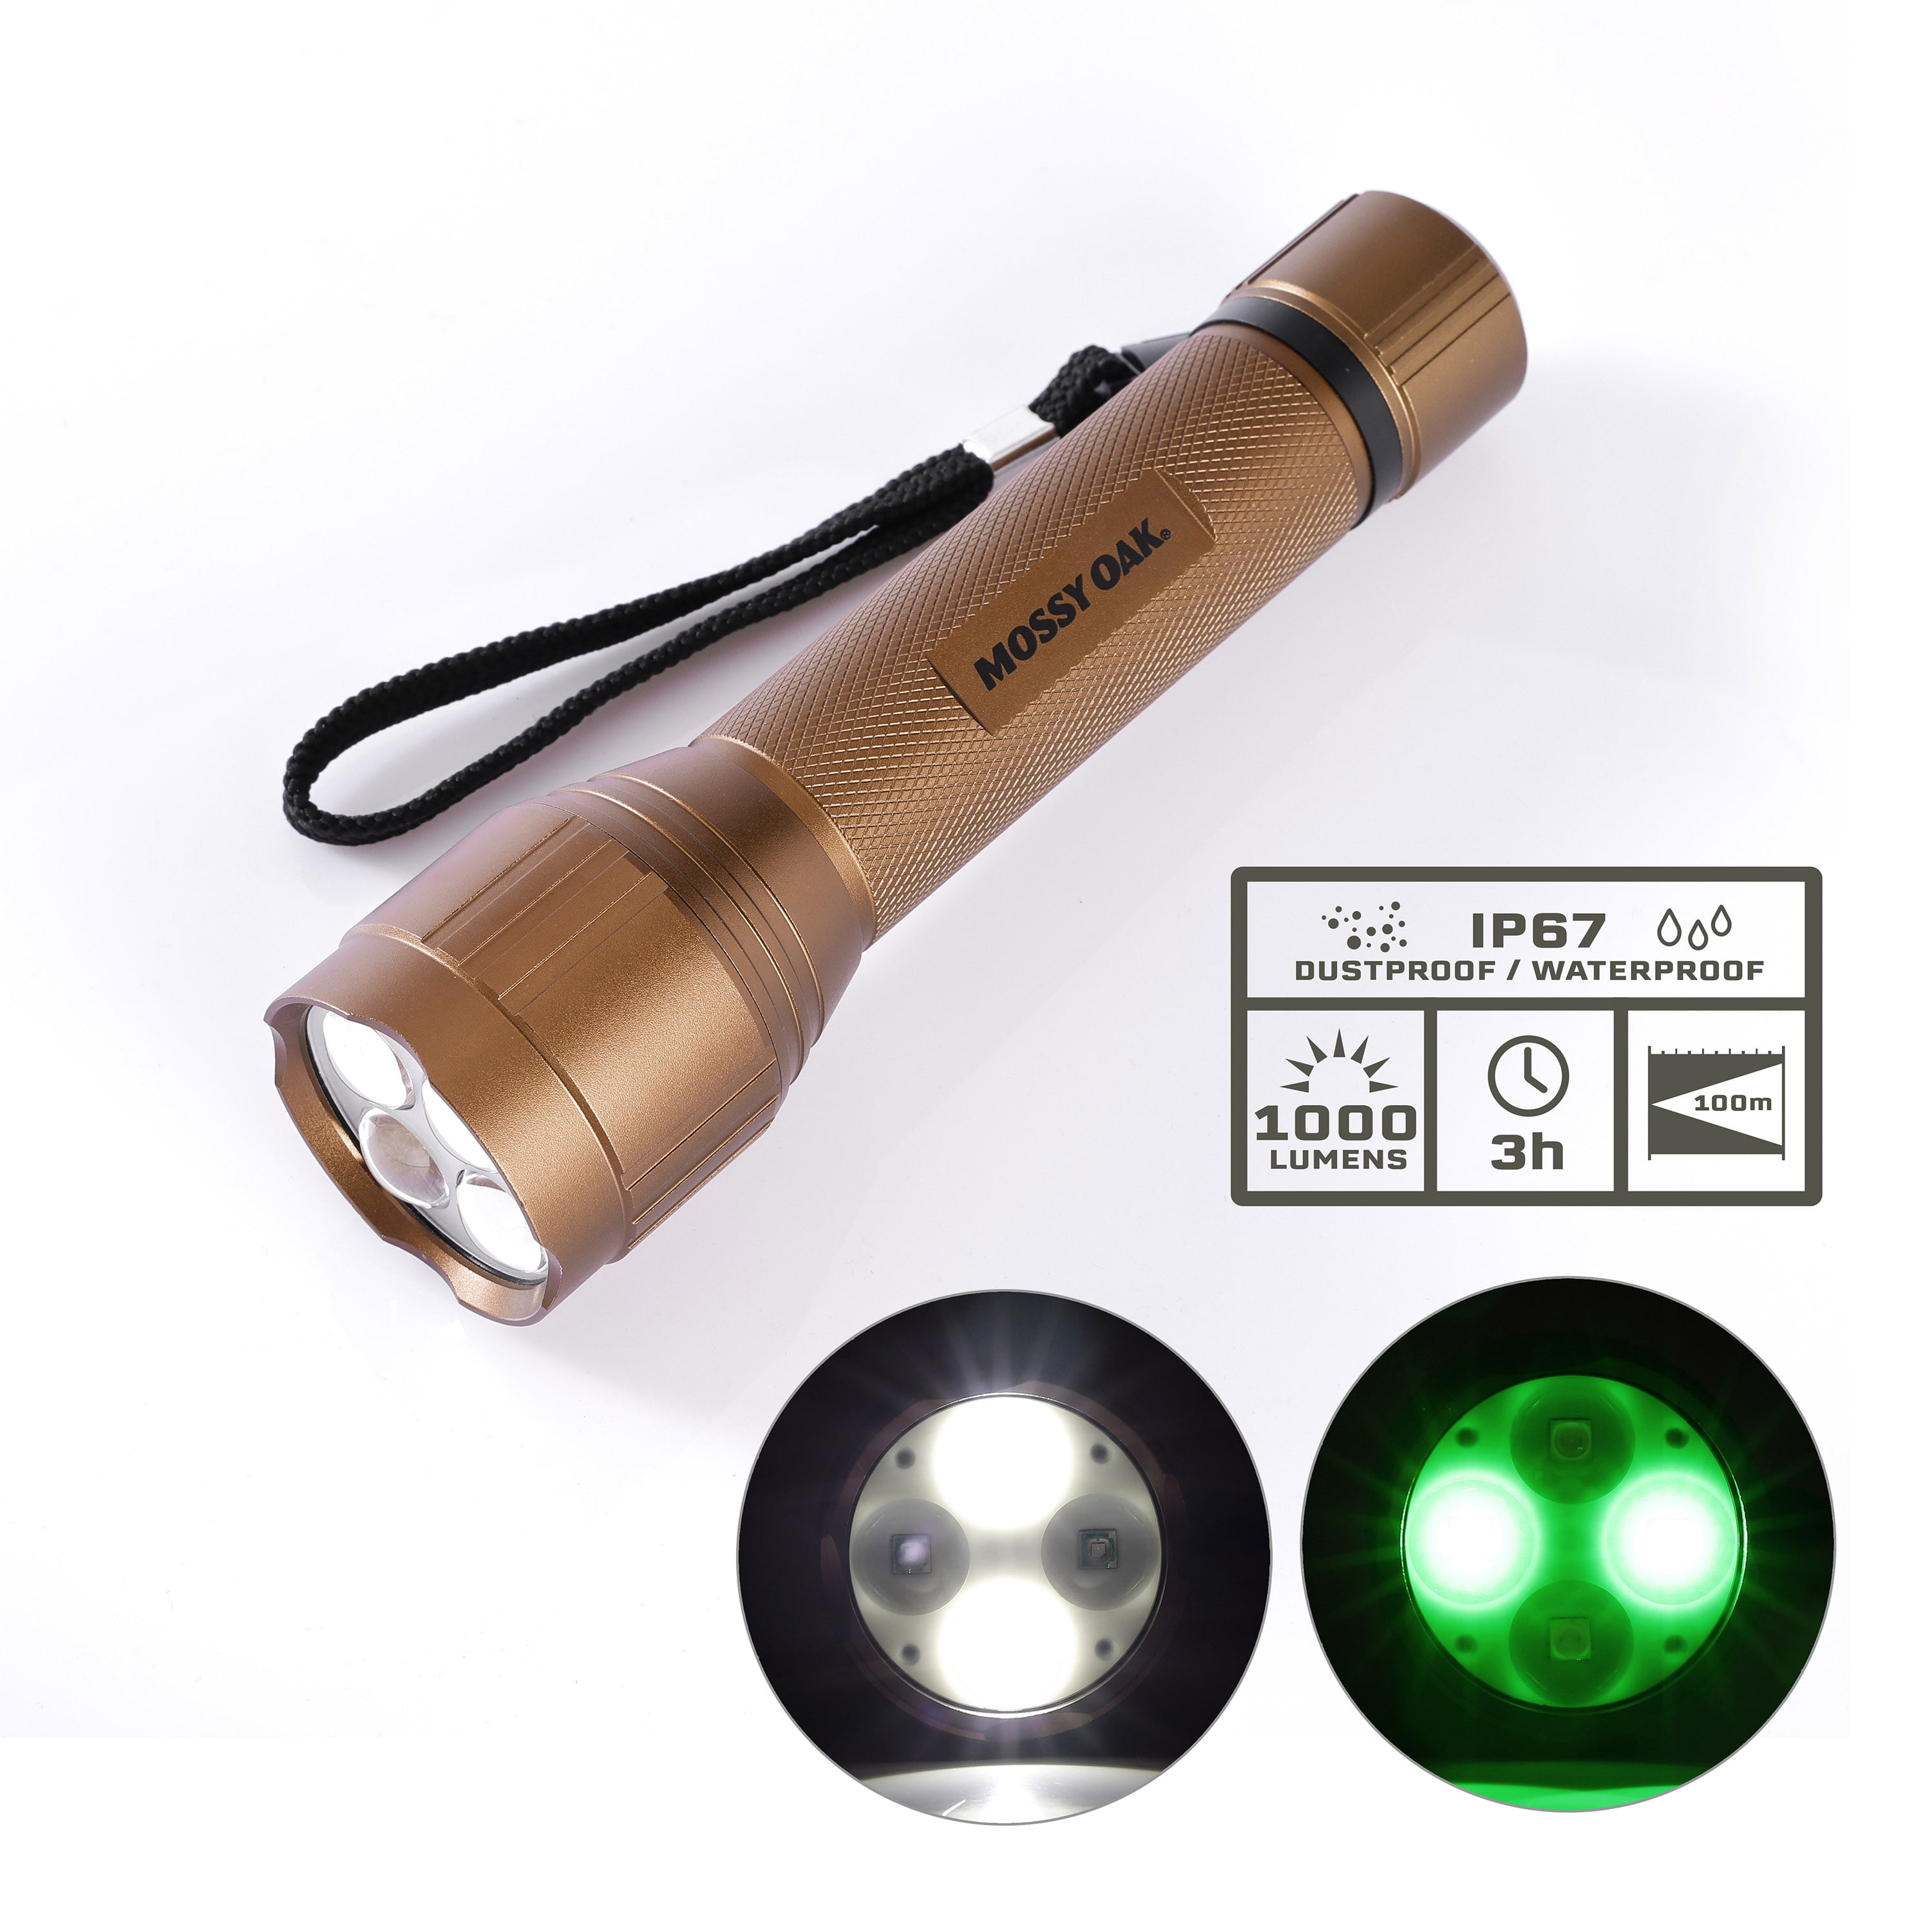 Mossy Oak Hunting Green Light Outdoor LED Flashlight, IP67 Dustproof Waterproof, 1000 Lumens, 6 AA Batteries Included